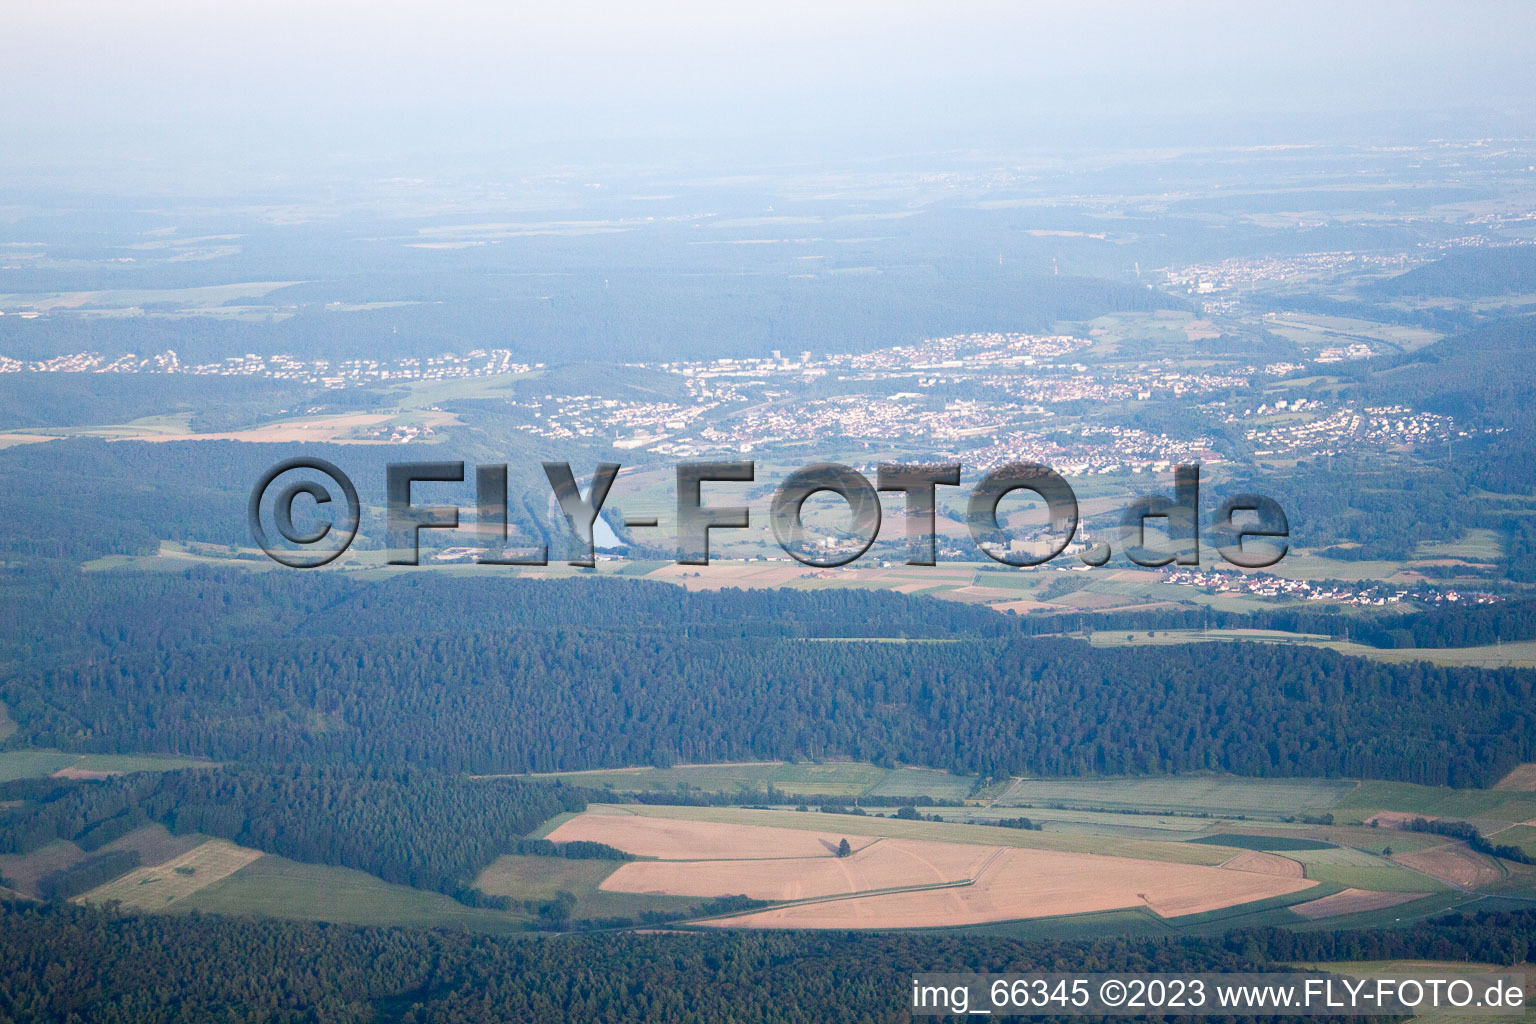 Mosbach dans le département Bade-Wurtemberg, Allemagne hors des airs